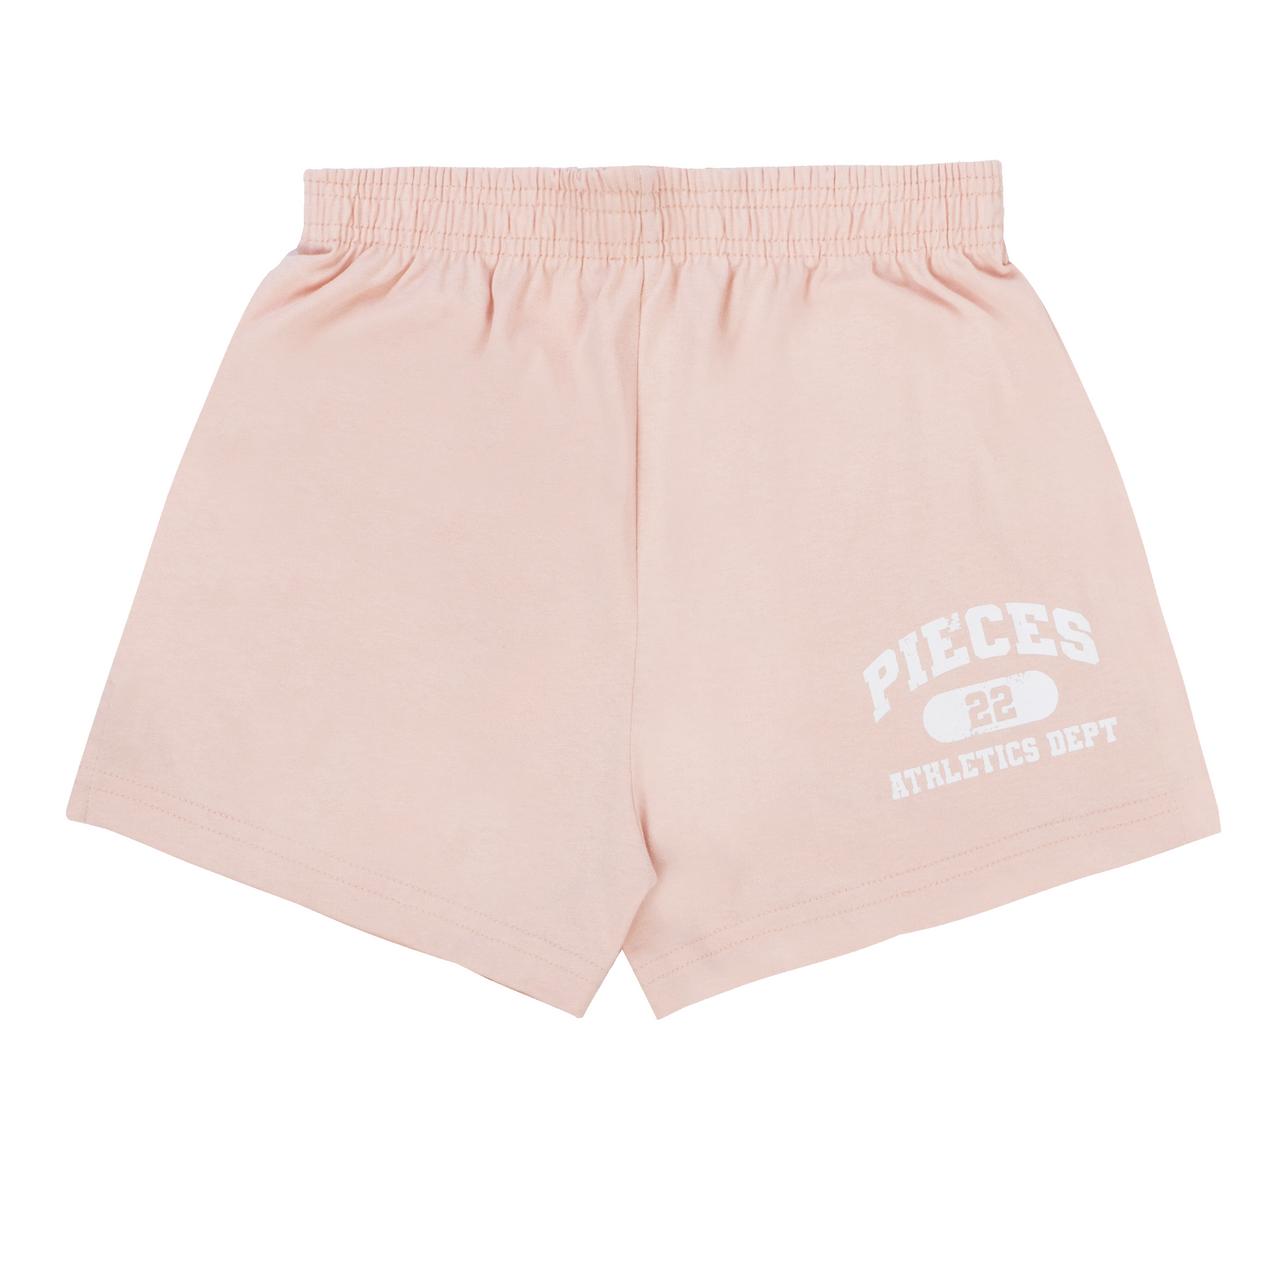 Pieces Women's Dept. Shorts Pink